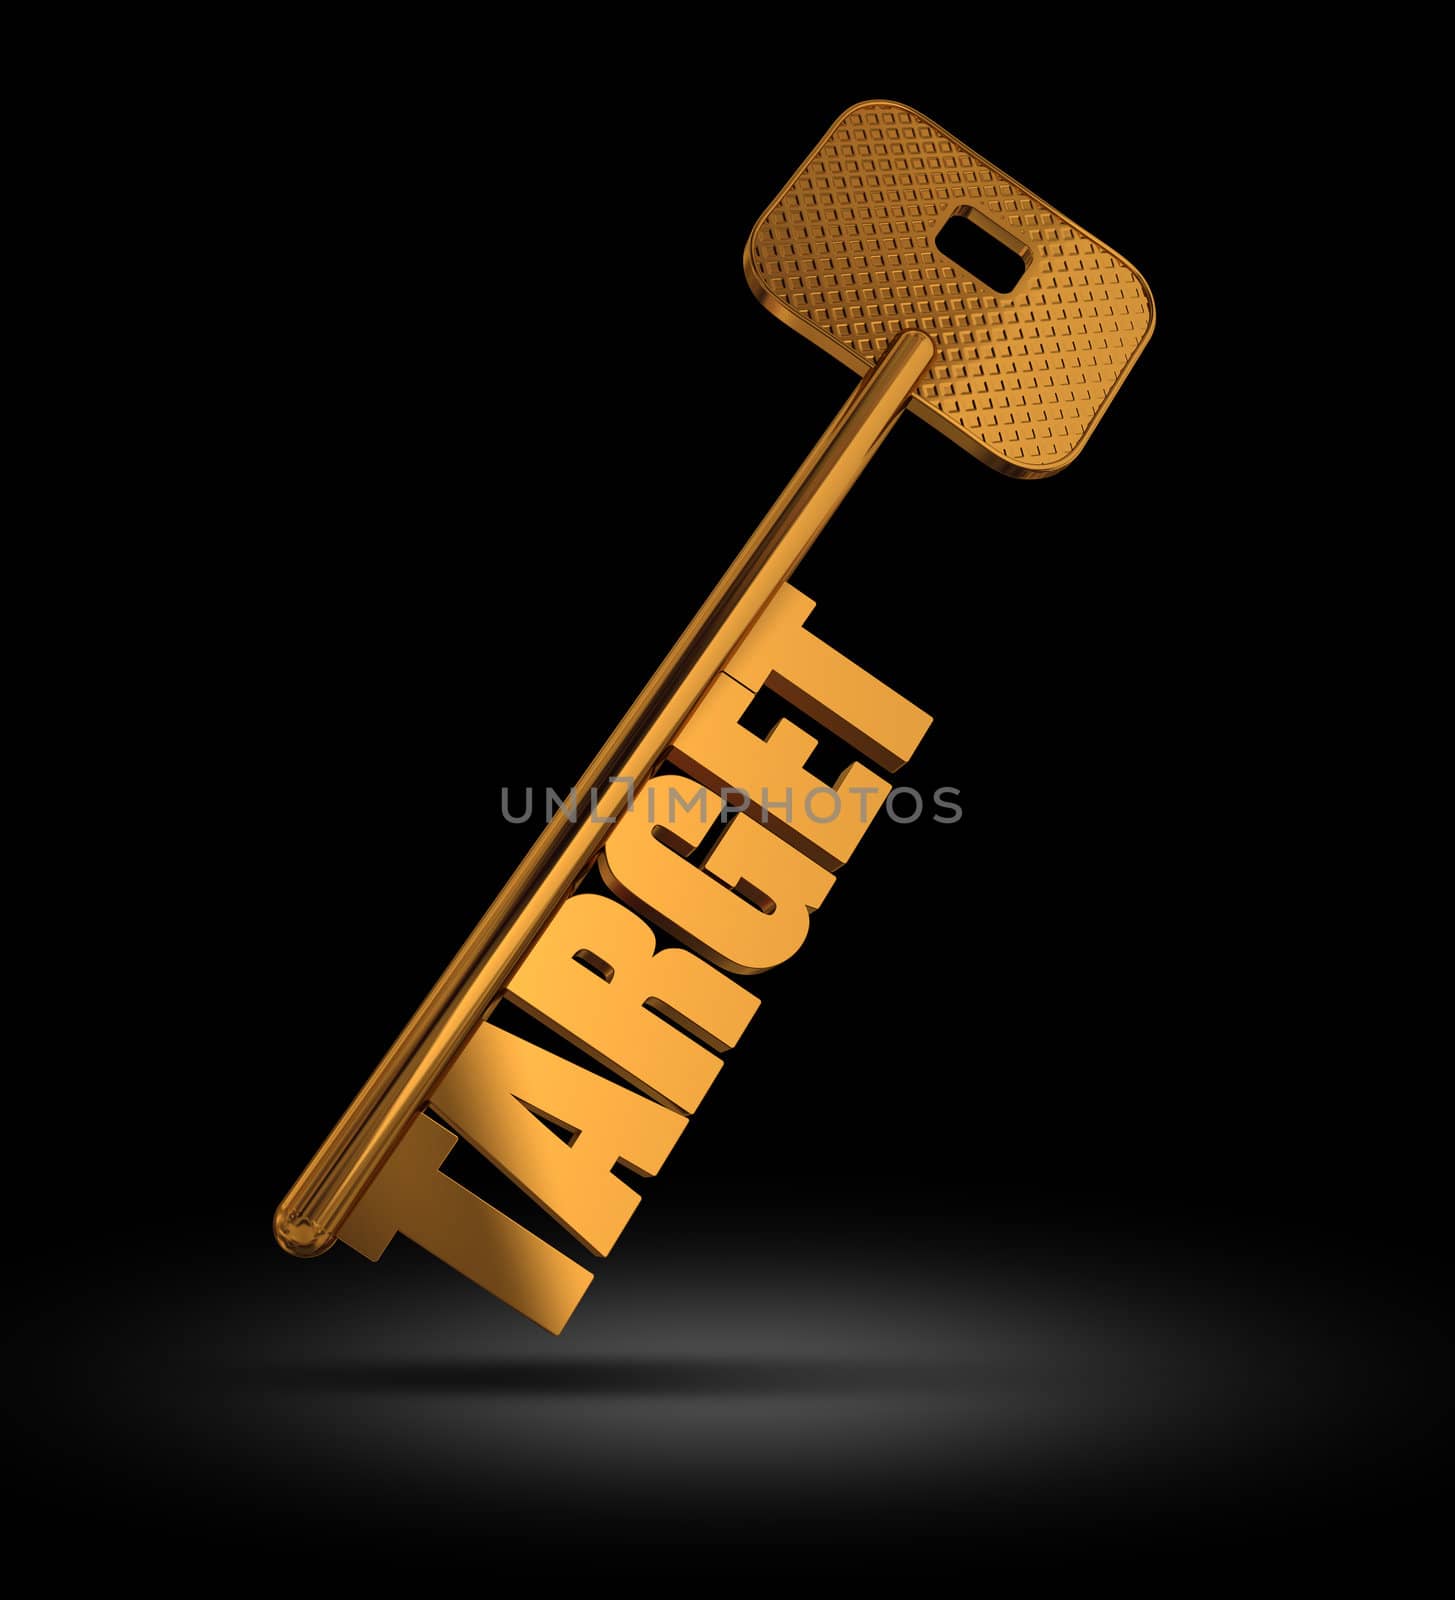 Target gold key by faberfoto